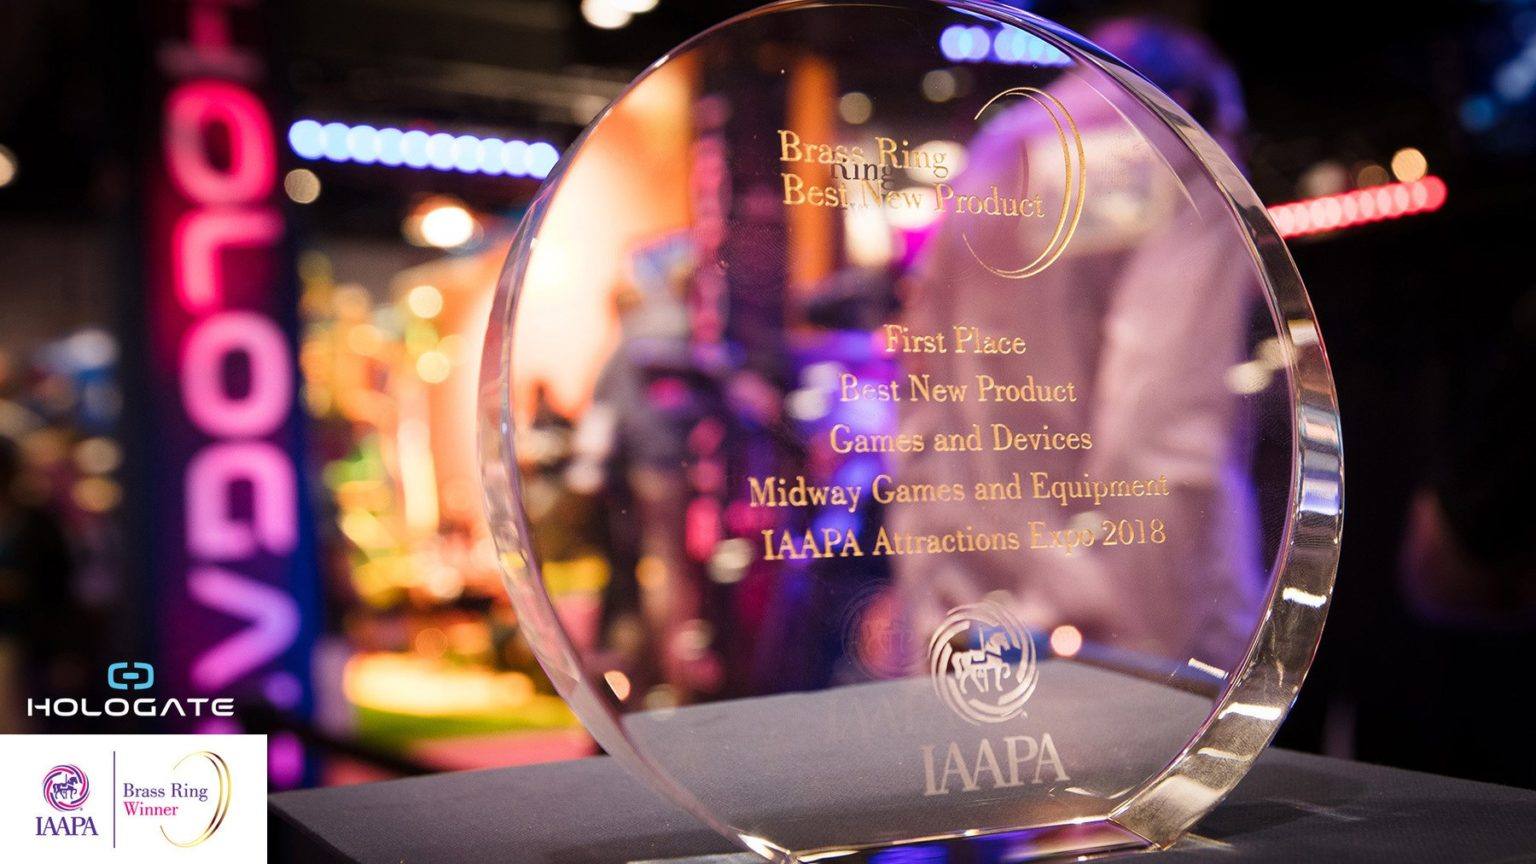 IAAPA Award Winner HOLOGATE